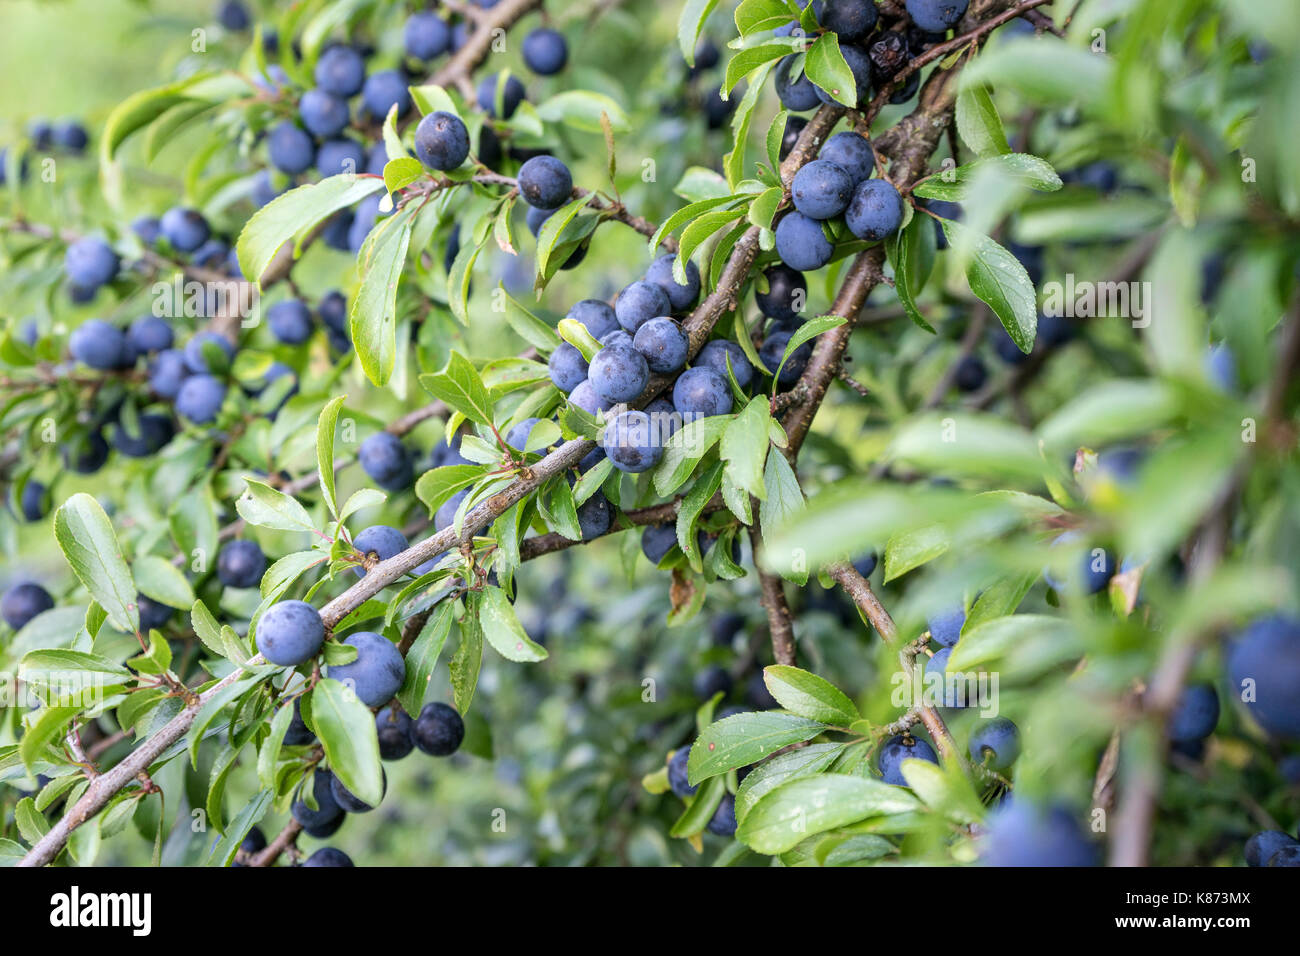 Blackthorn shrub with ripe fruits Stock Photo